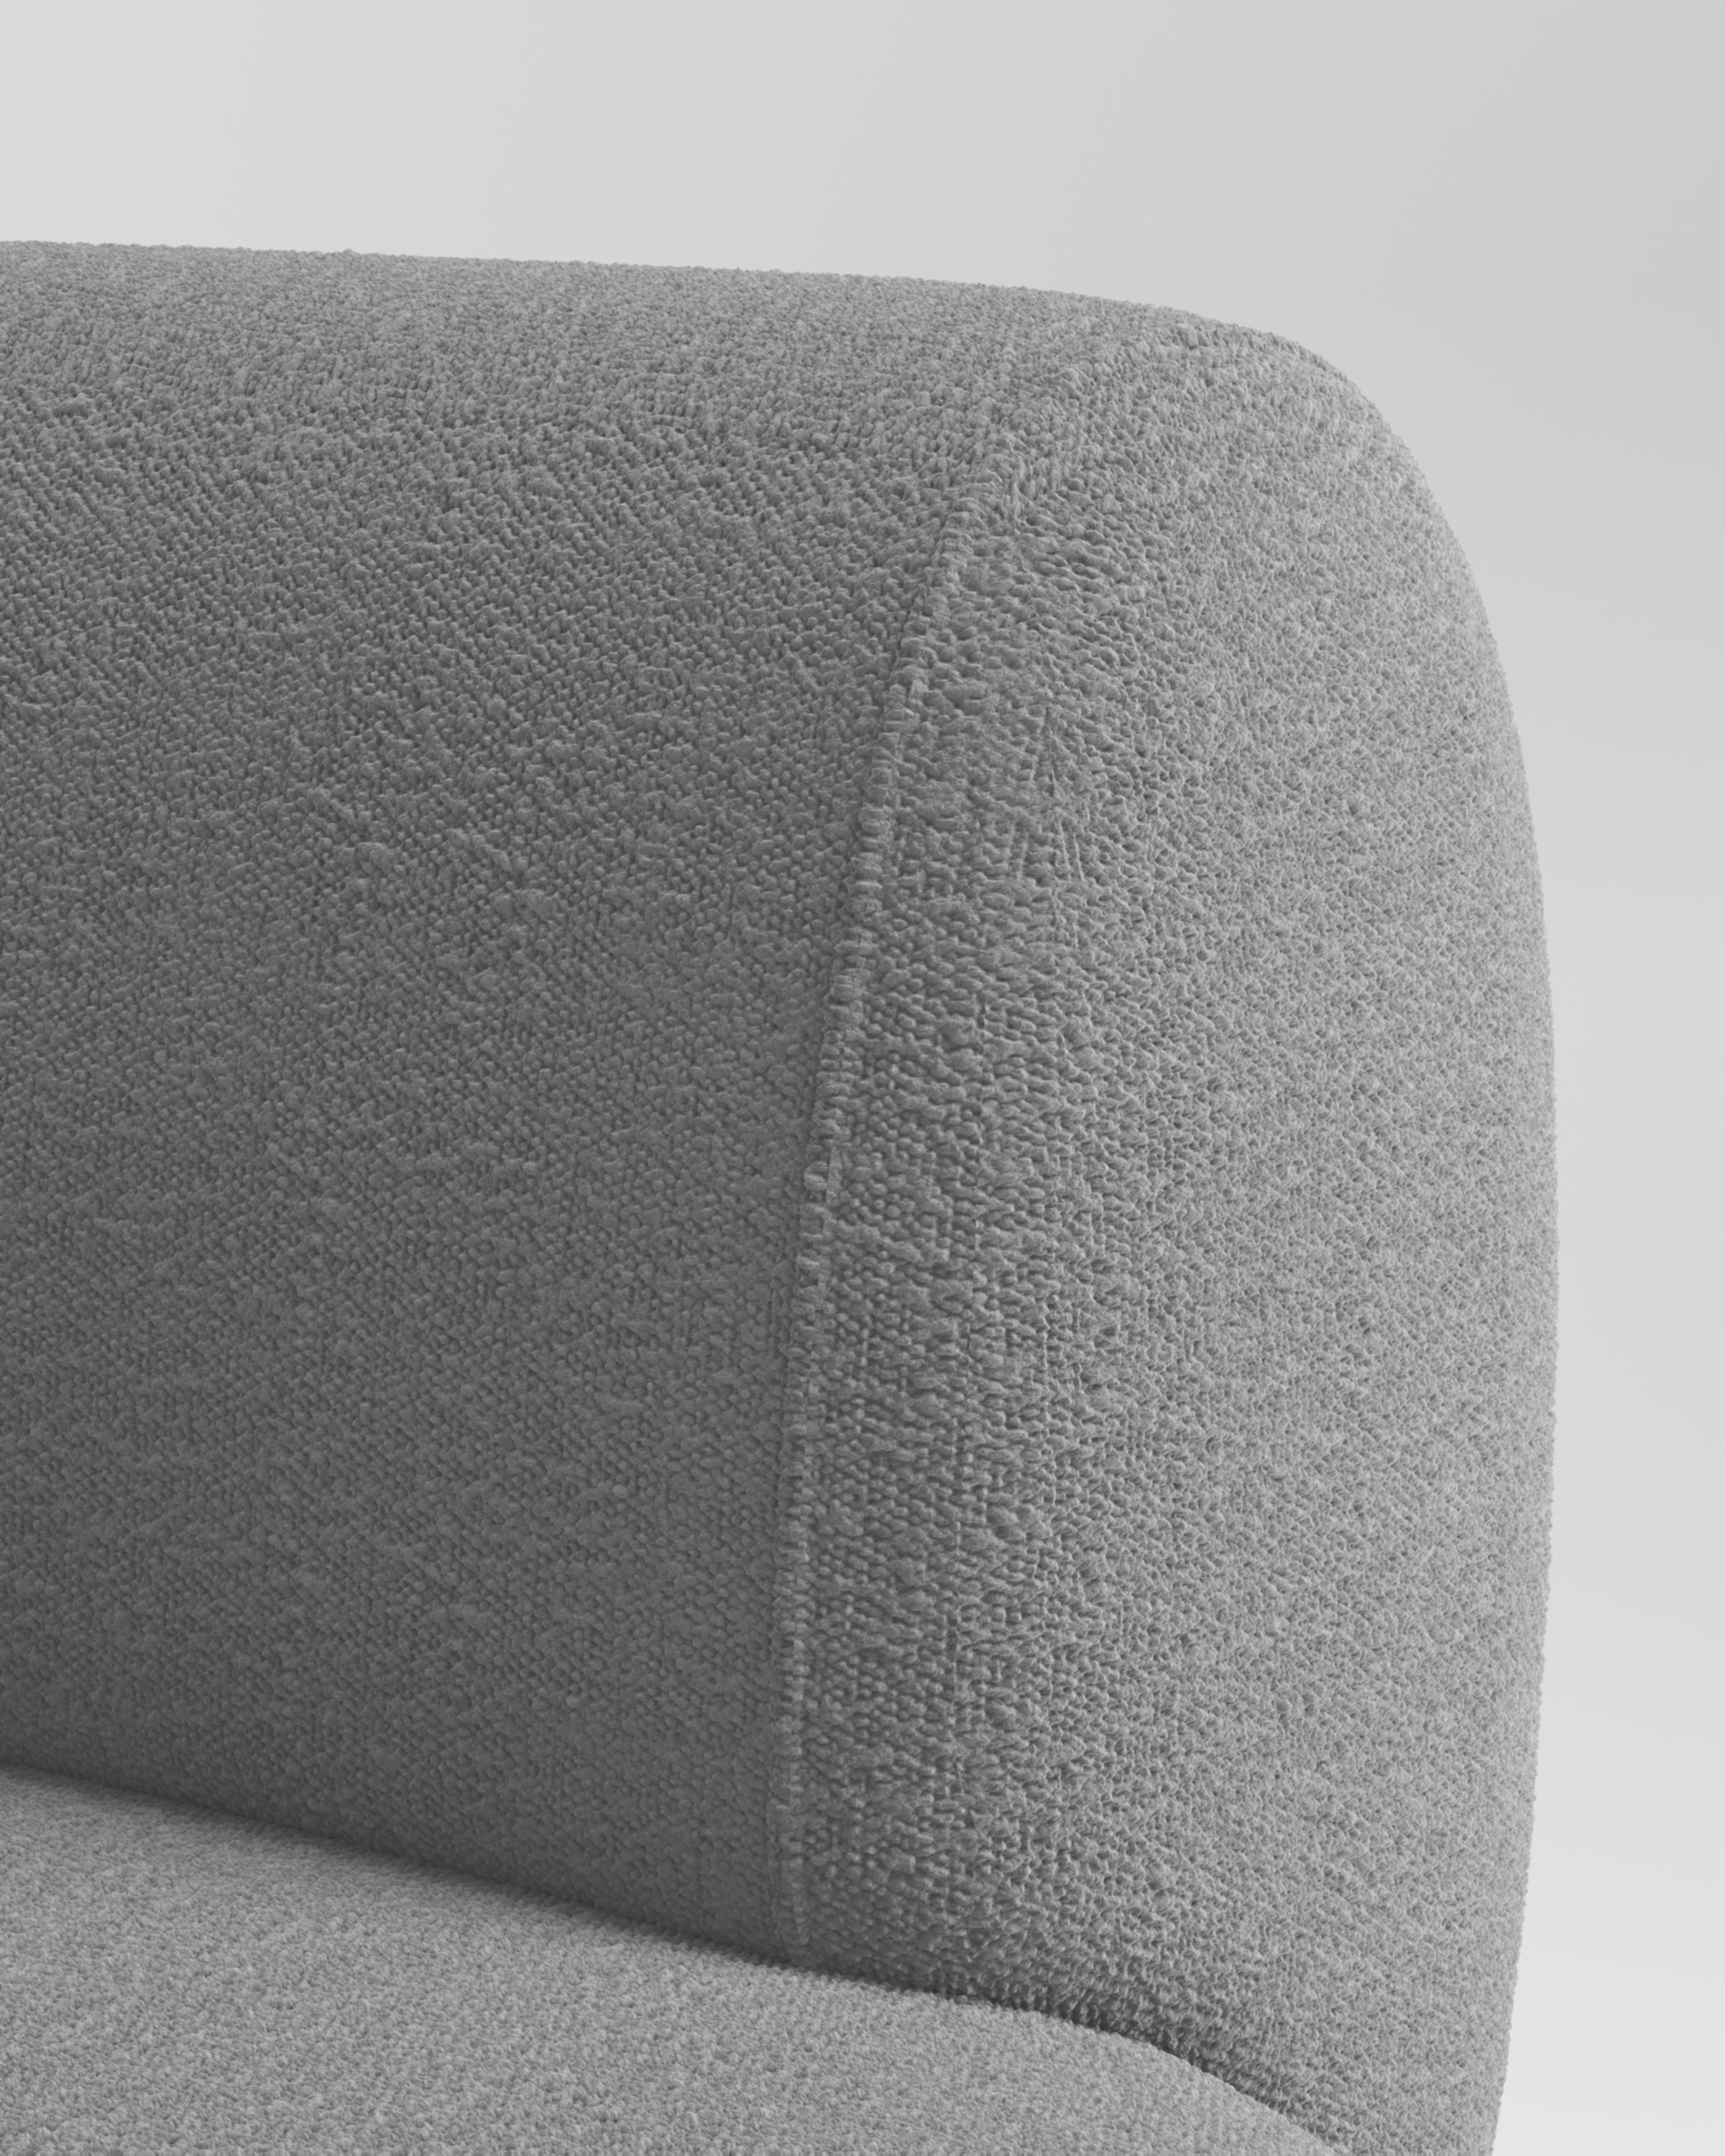 Portuguese Collector Hug Sofa Designed by Ferrianisbolgi Fabric Bouclé Light Grey For Sale